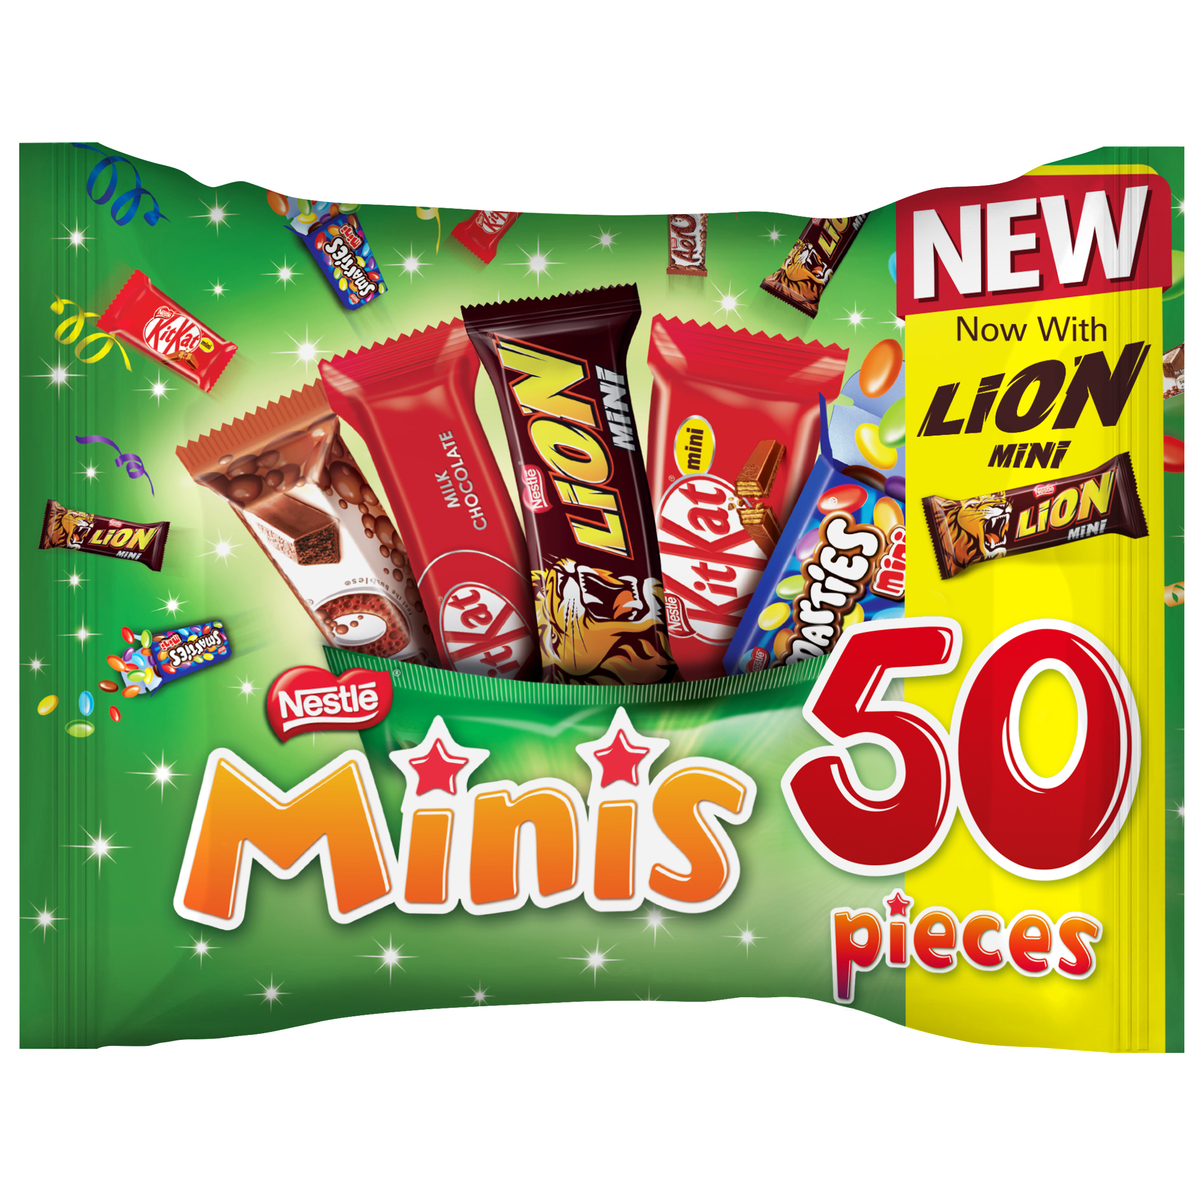 Nestle Minis LuLu Chocolate price Online kanbkam | Kuwait Lulu Kuwait Chocolate | supermarket 715g in pcs Bags Best | Mix Bag UAE | Price at 50